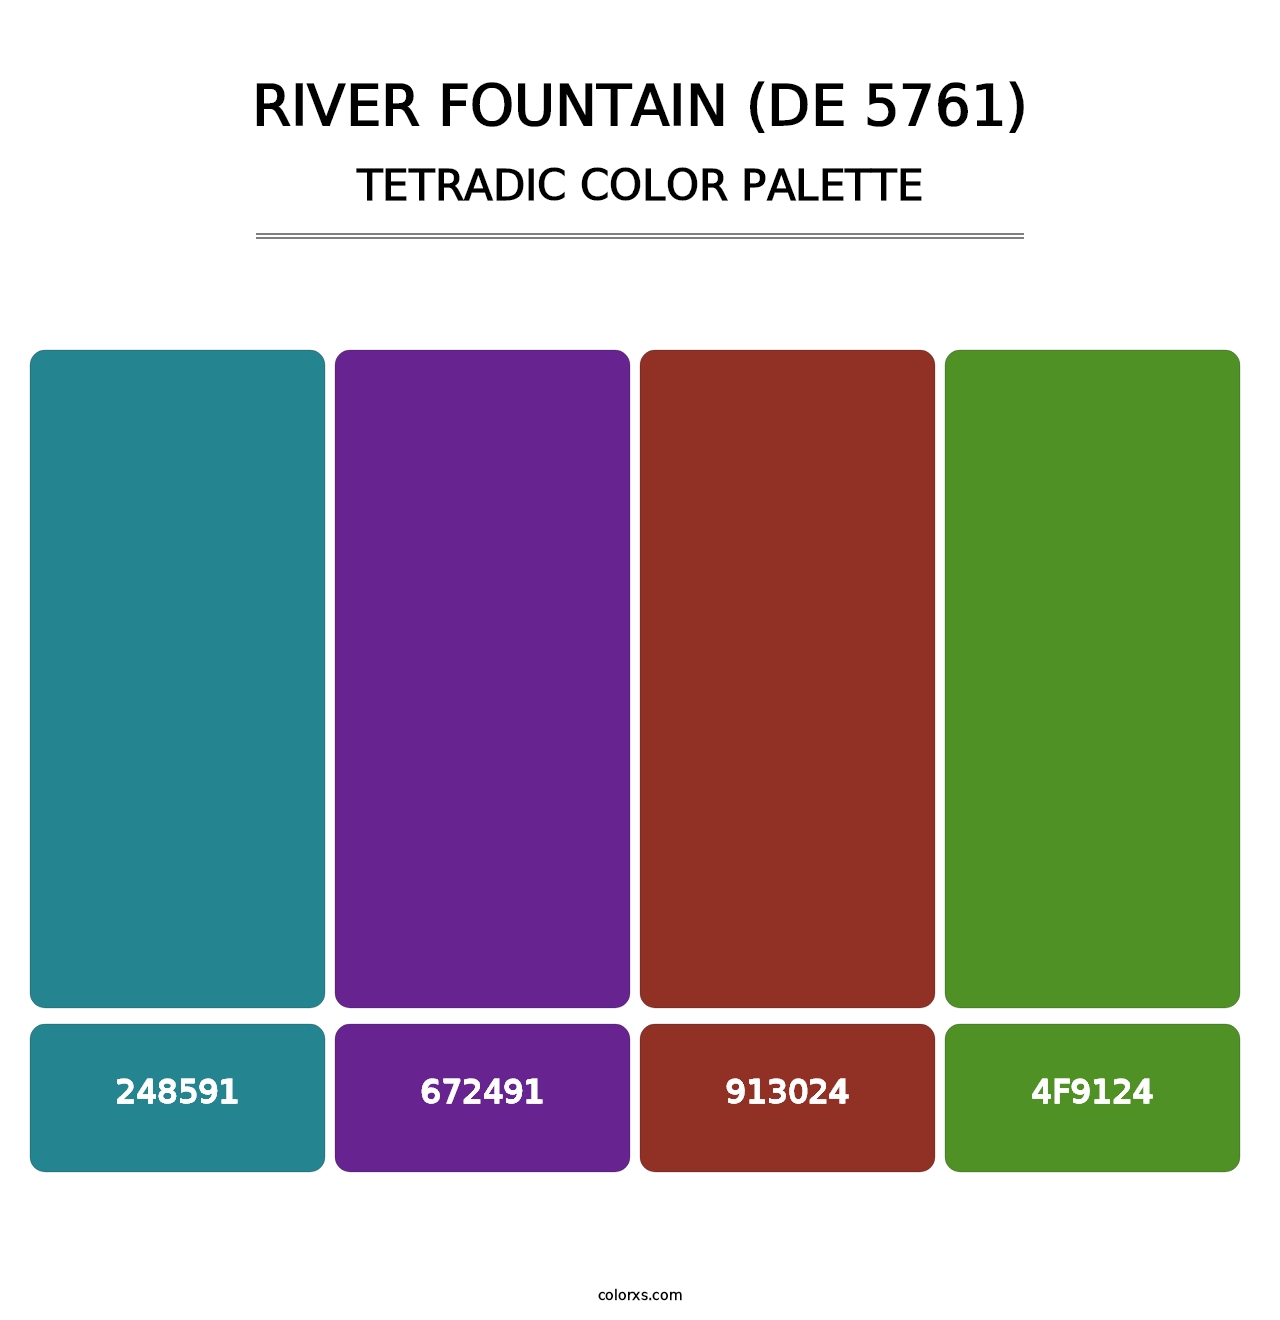 River Fountain (DE 5761) - Tetradic Color Palette